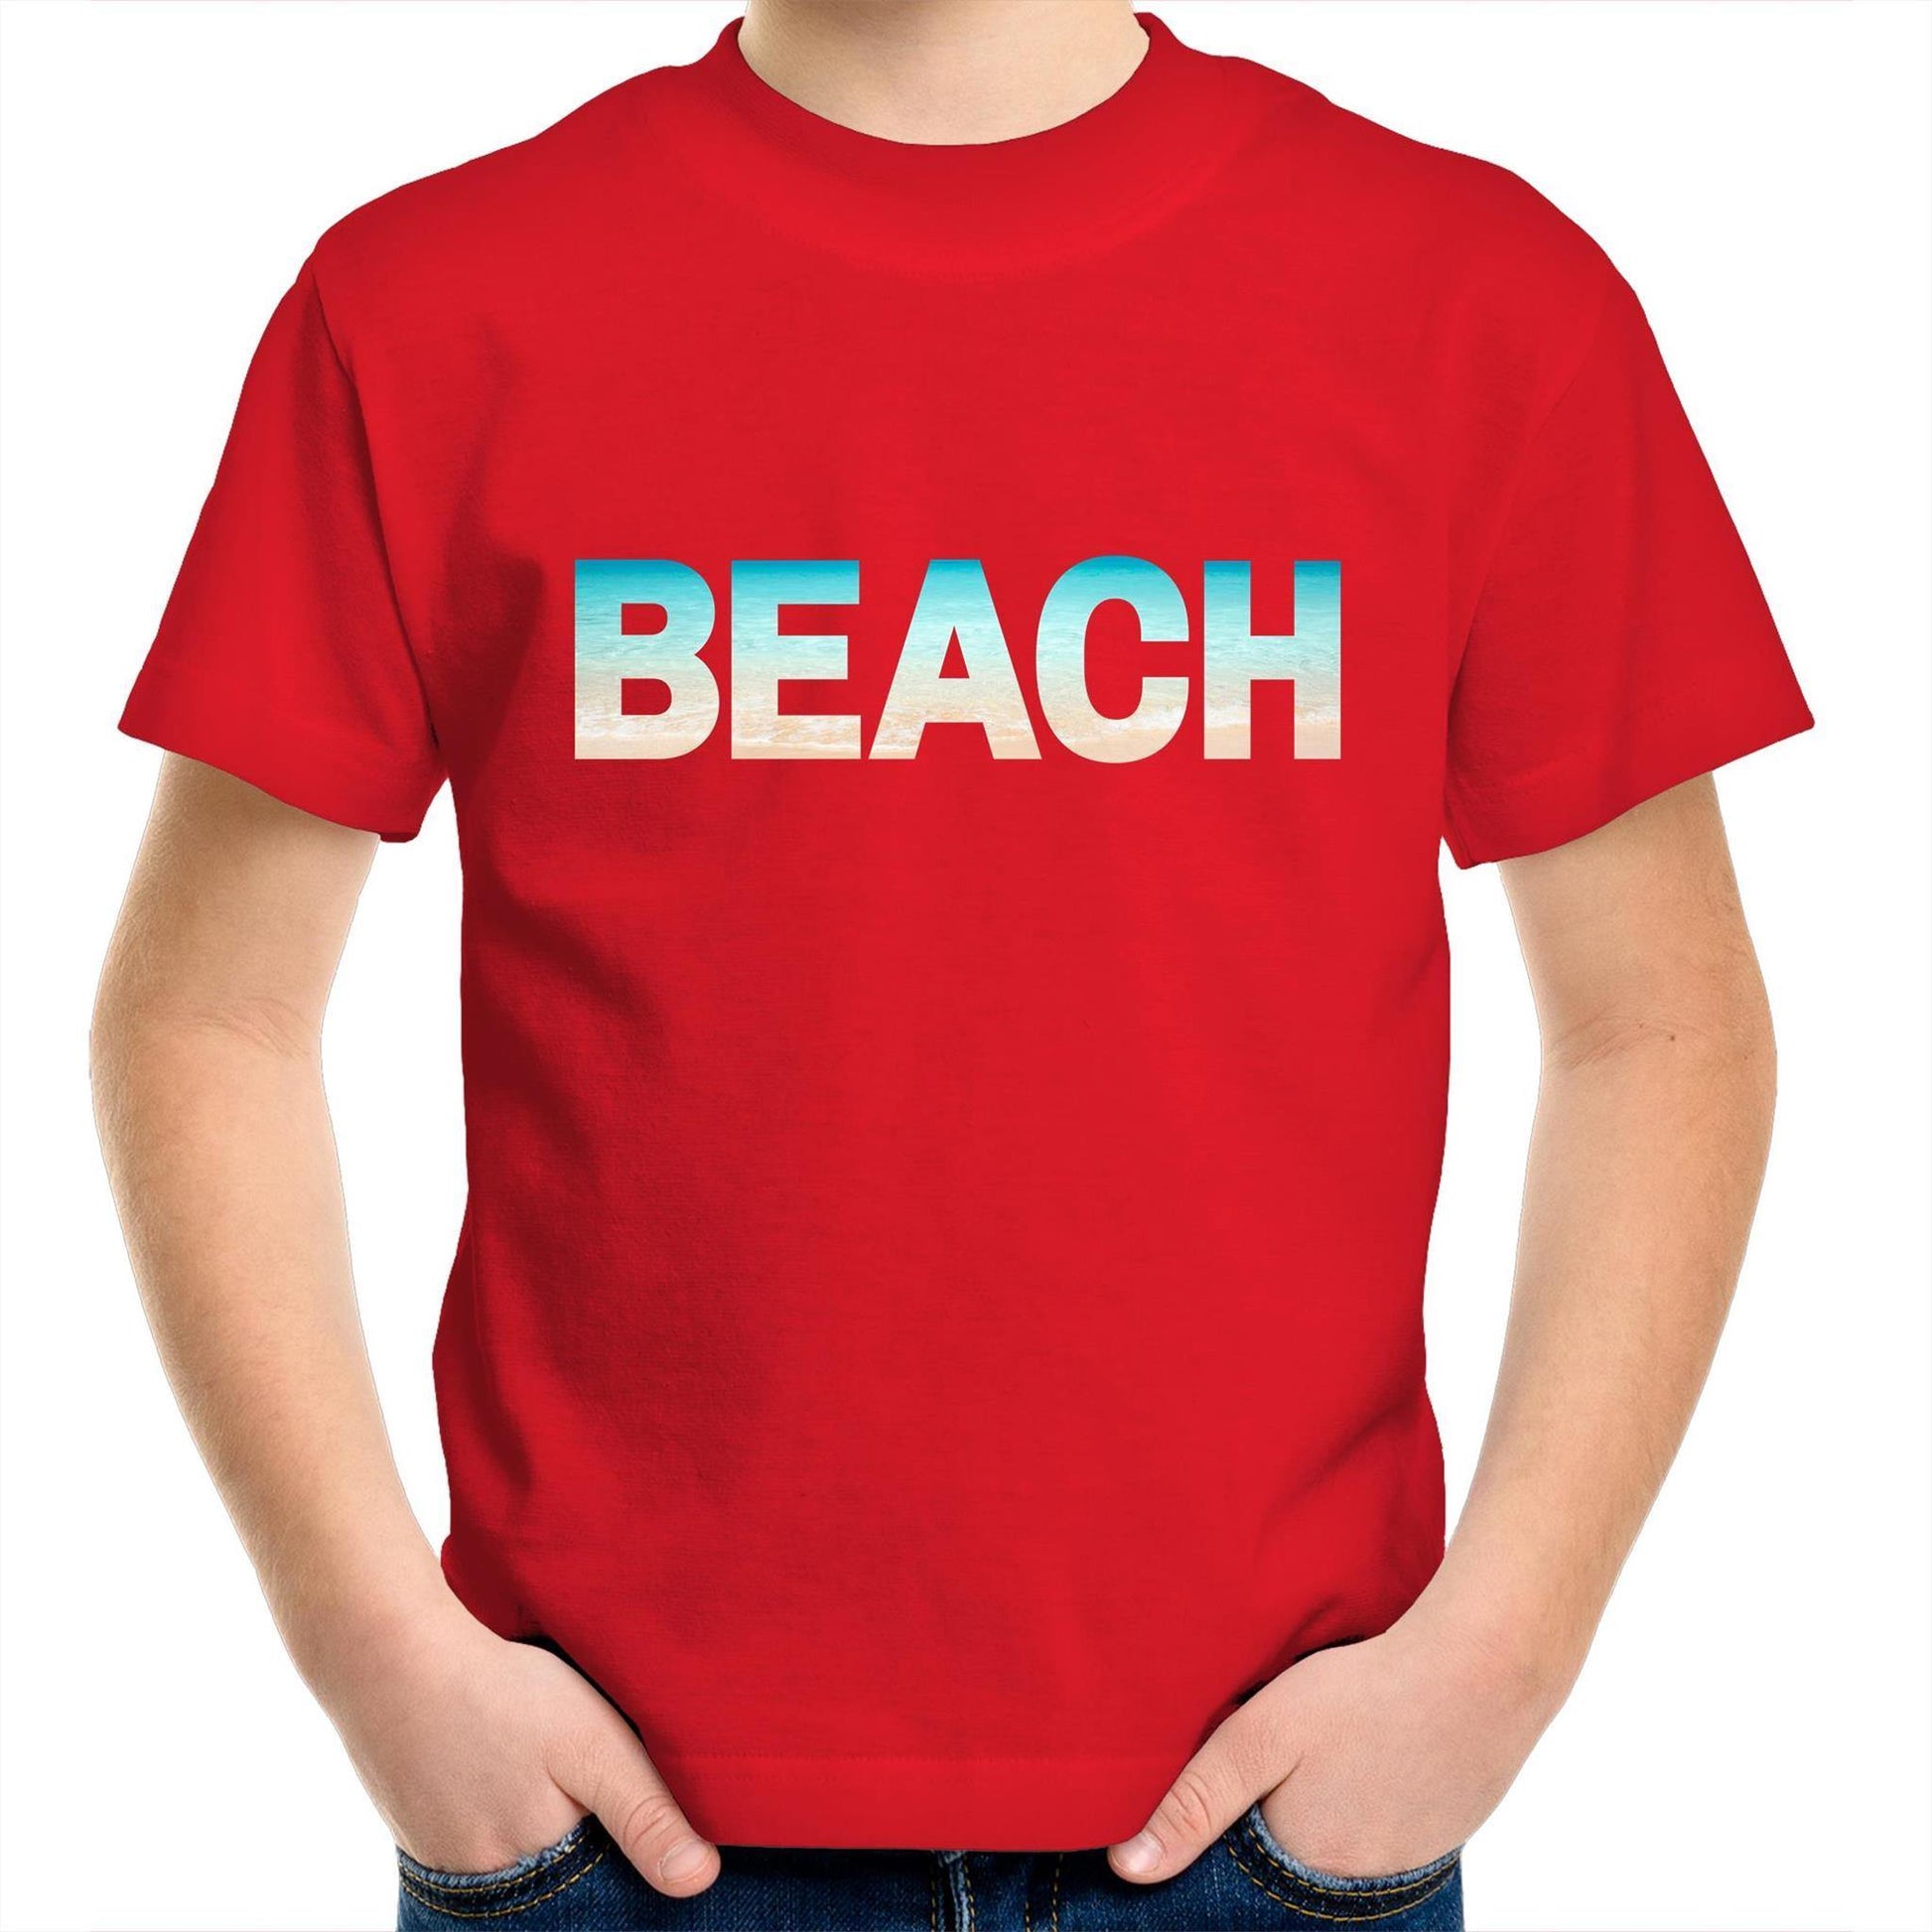 Beach - Kids Youth Crew T-Shirt Red Kids Youth T-shirt Summer